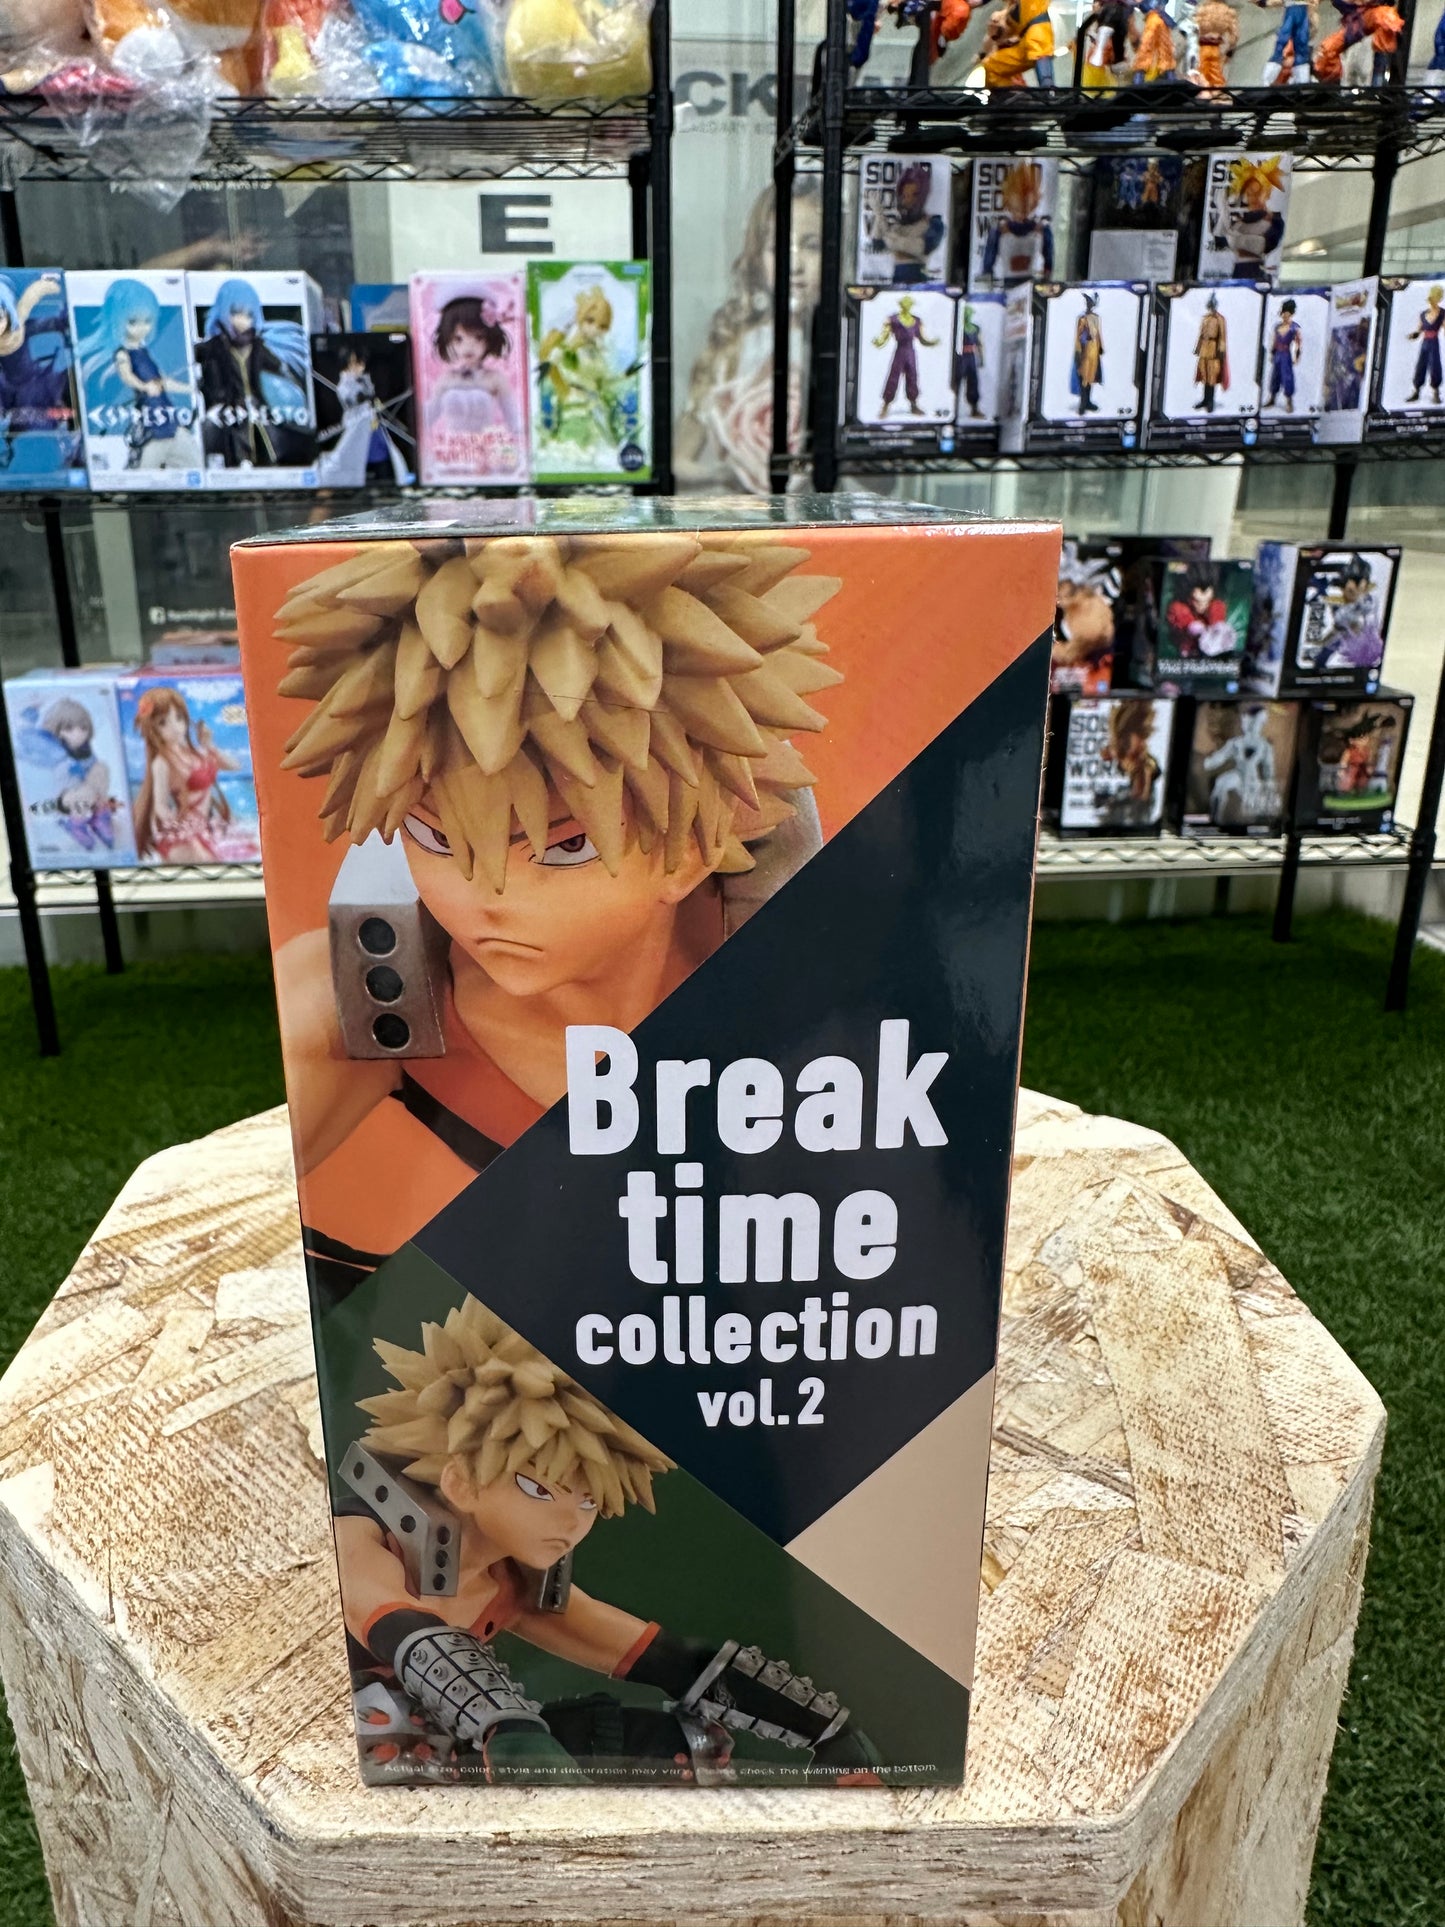 Break time Collection Bakuga